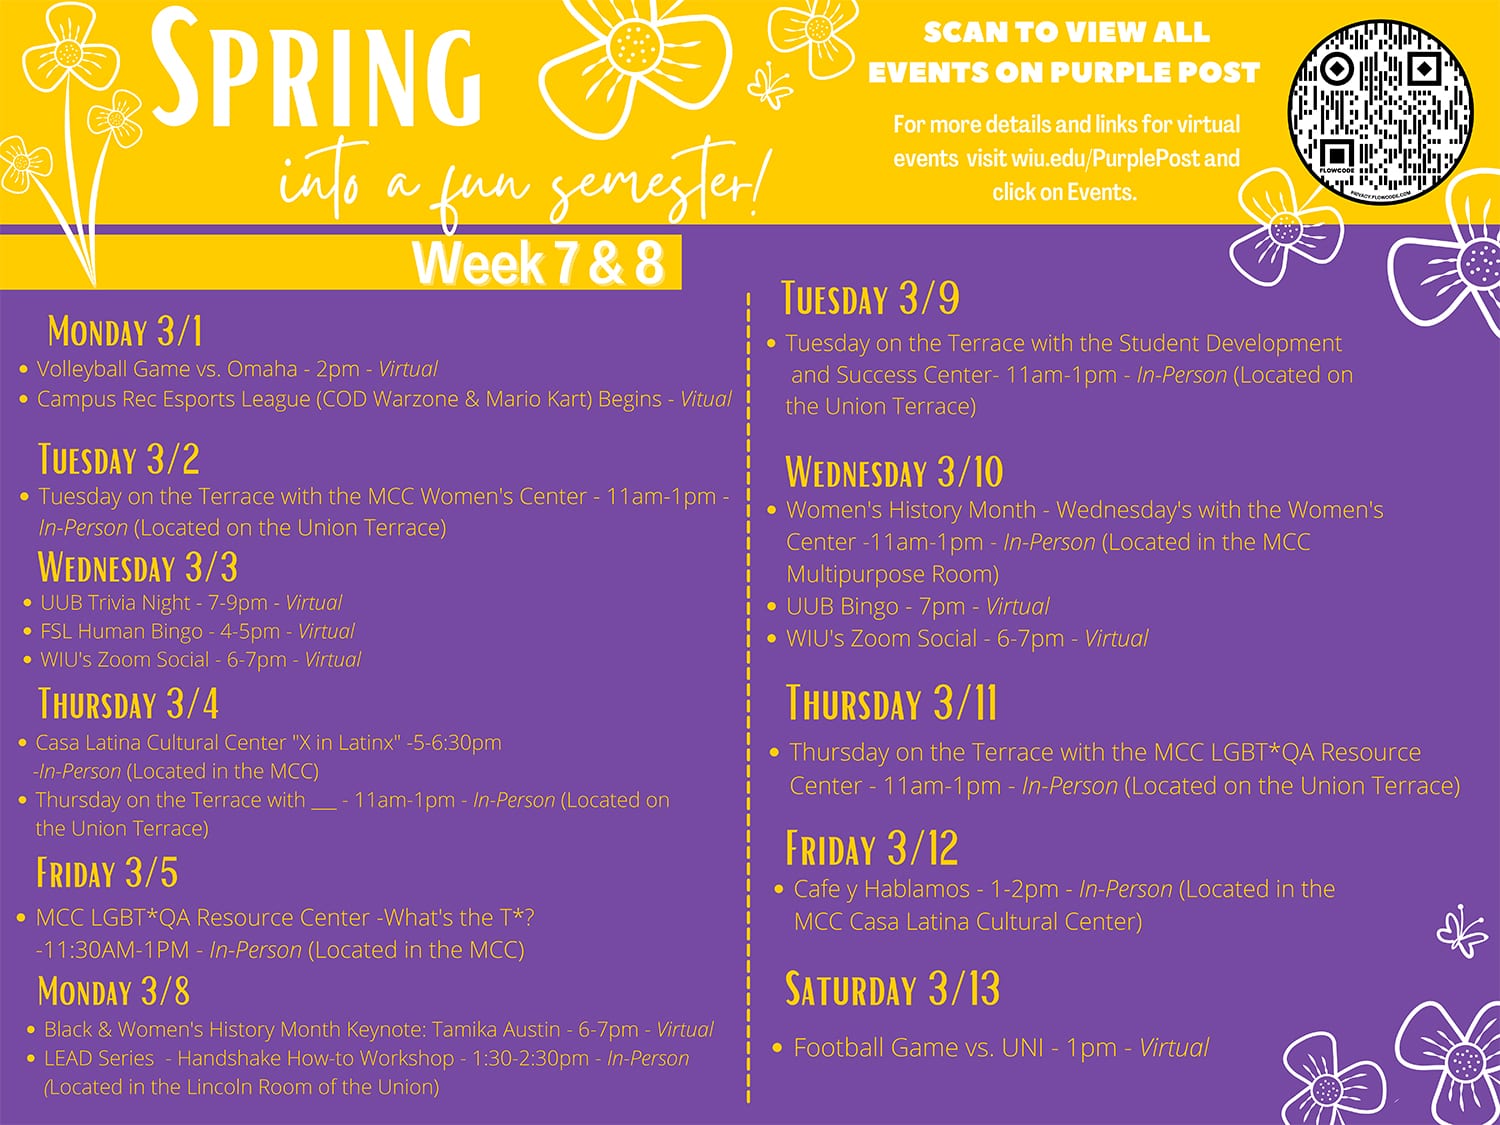 'Spring Into a Fun Semester' at WIU Continues Through March 13 Quad